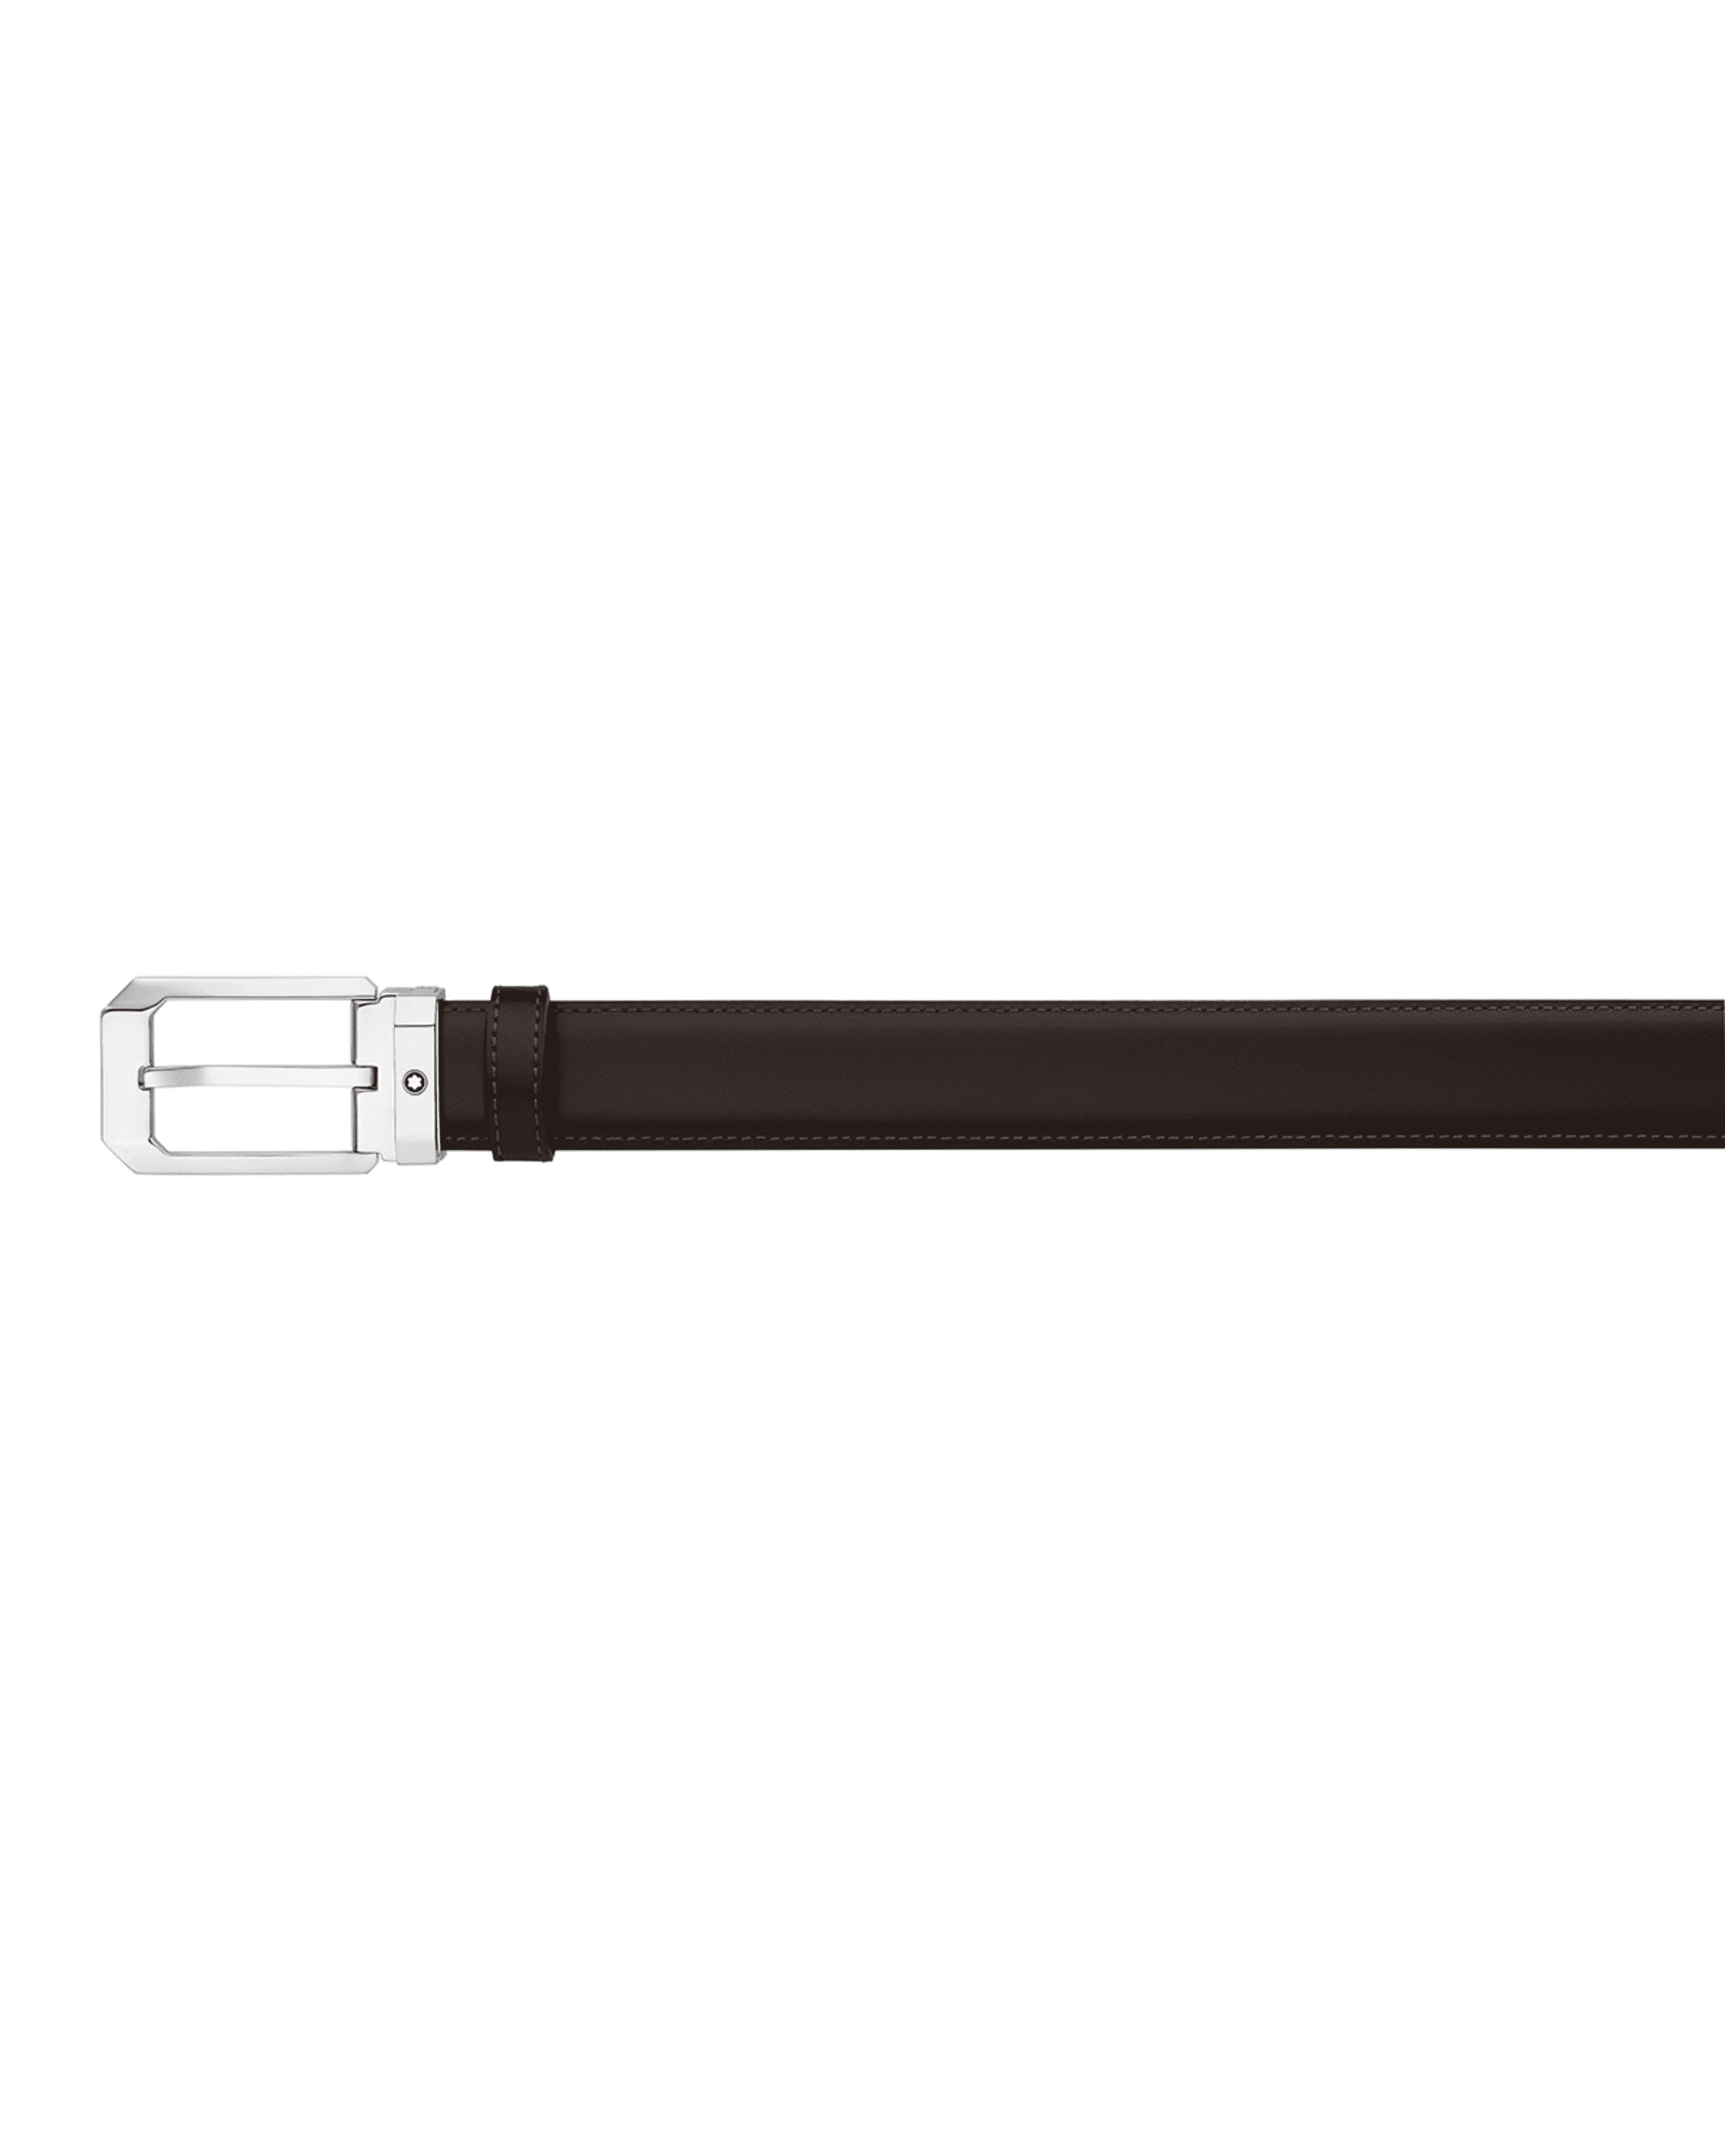 Reversible Leather Belt, 47.2"L - 2